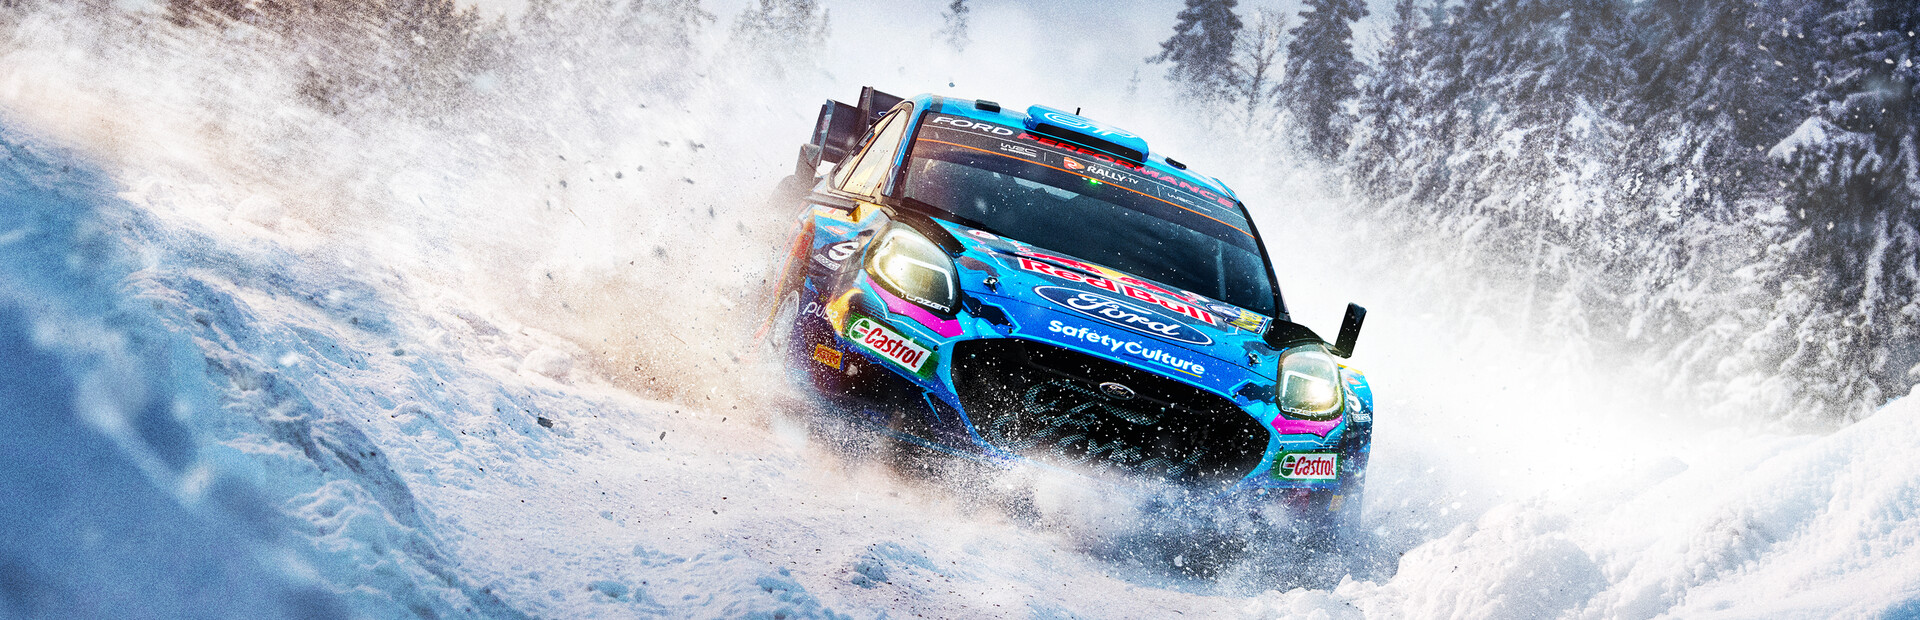 EA SPORTS™ WRC cover image